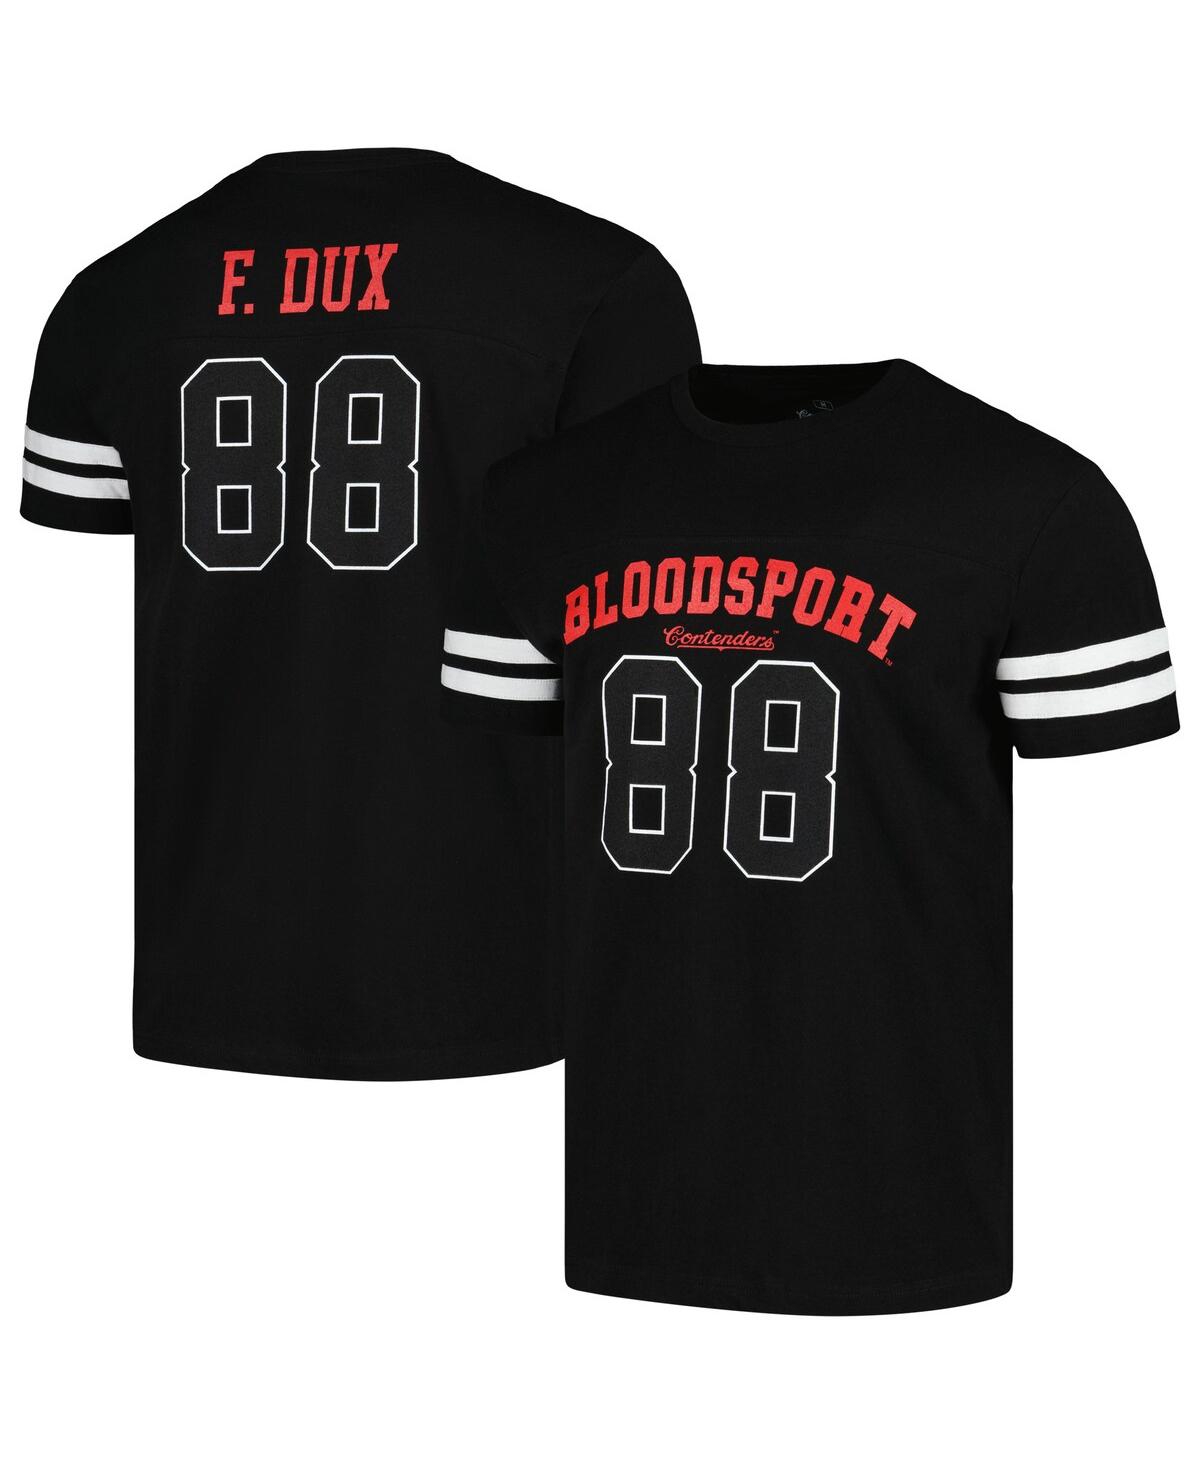 Men's Contenders Clothing Black Bloodsport 88 Jersey T-shirt - Black